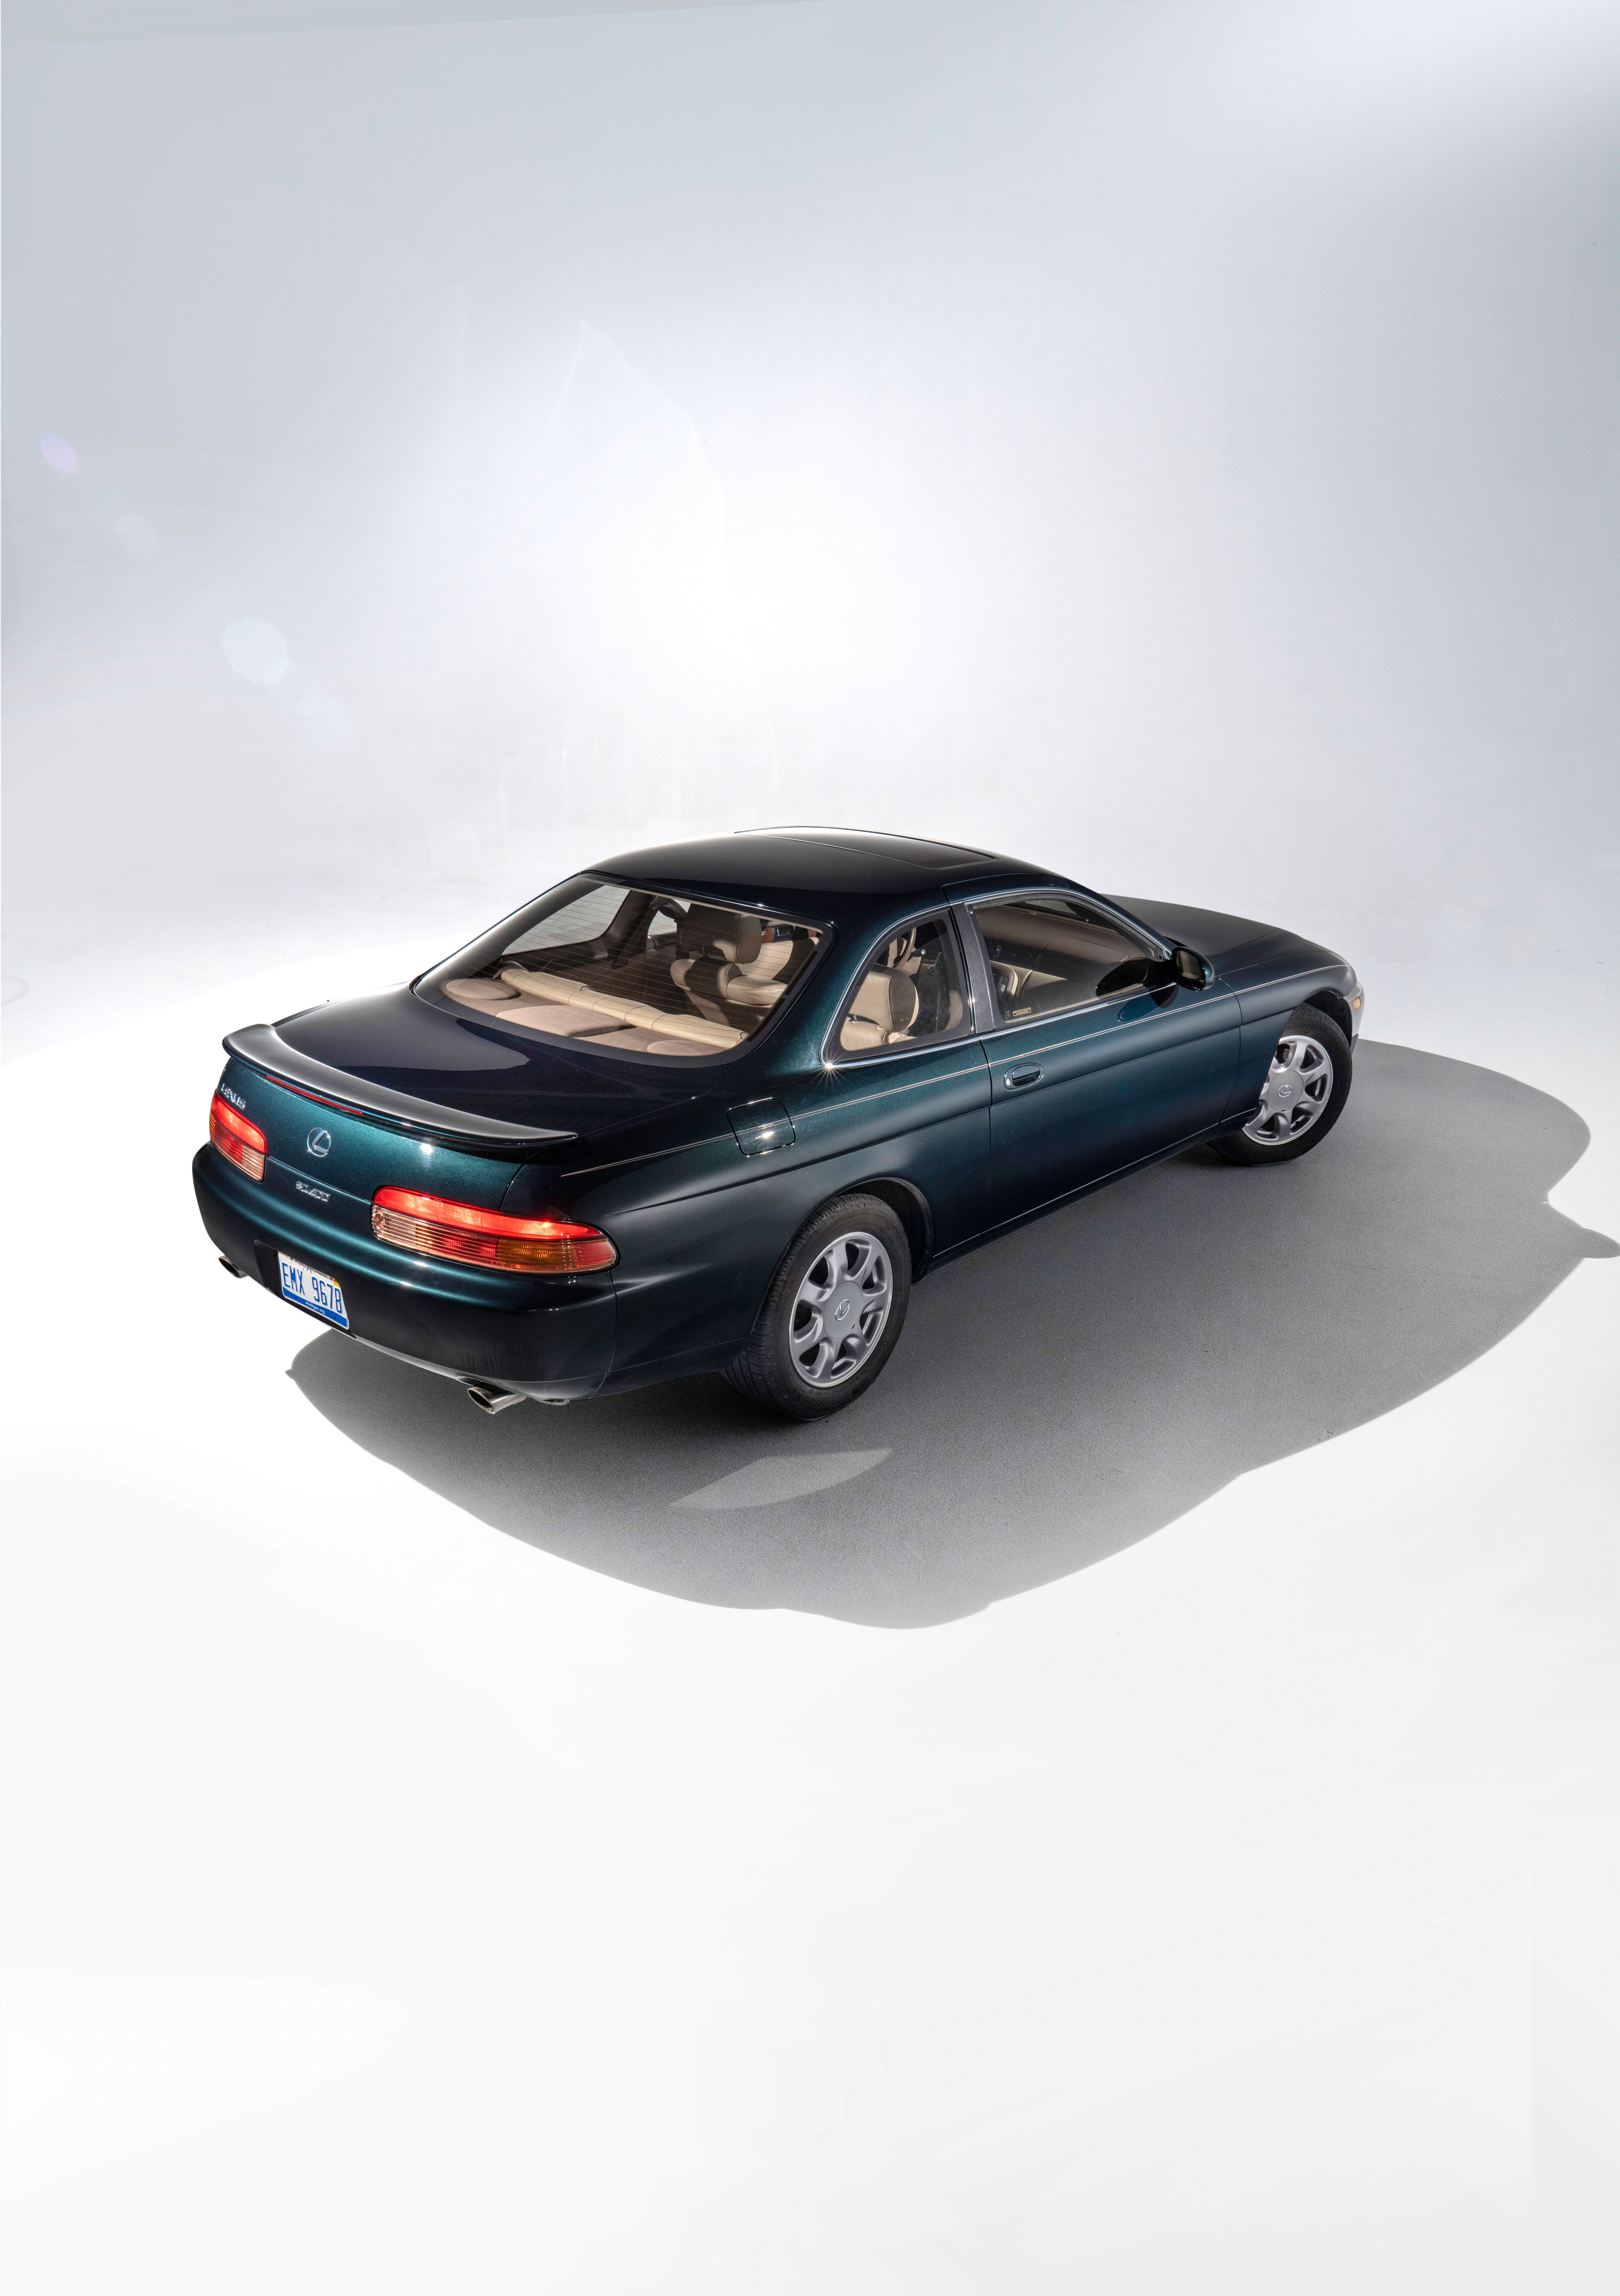 Used Honda CRX Convertible (1992 - 1997) Review